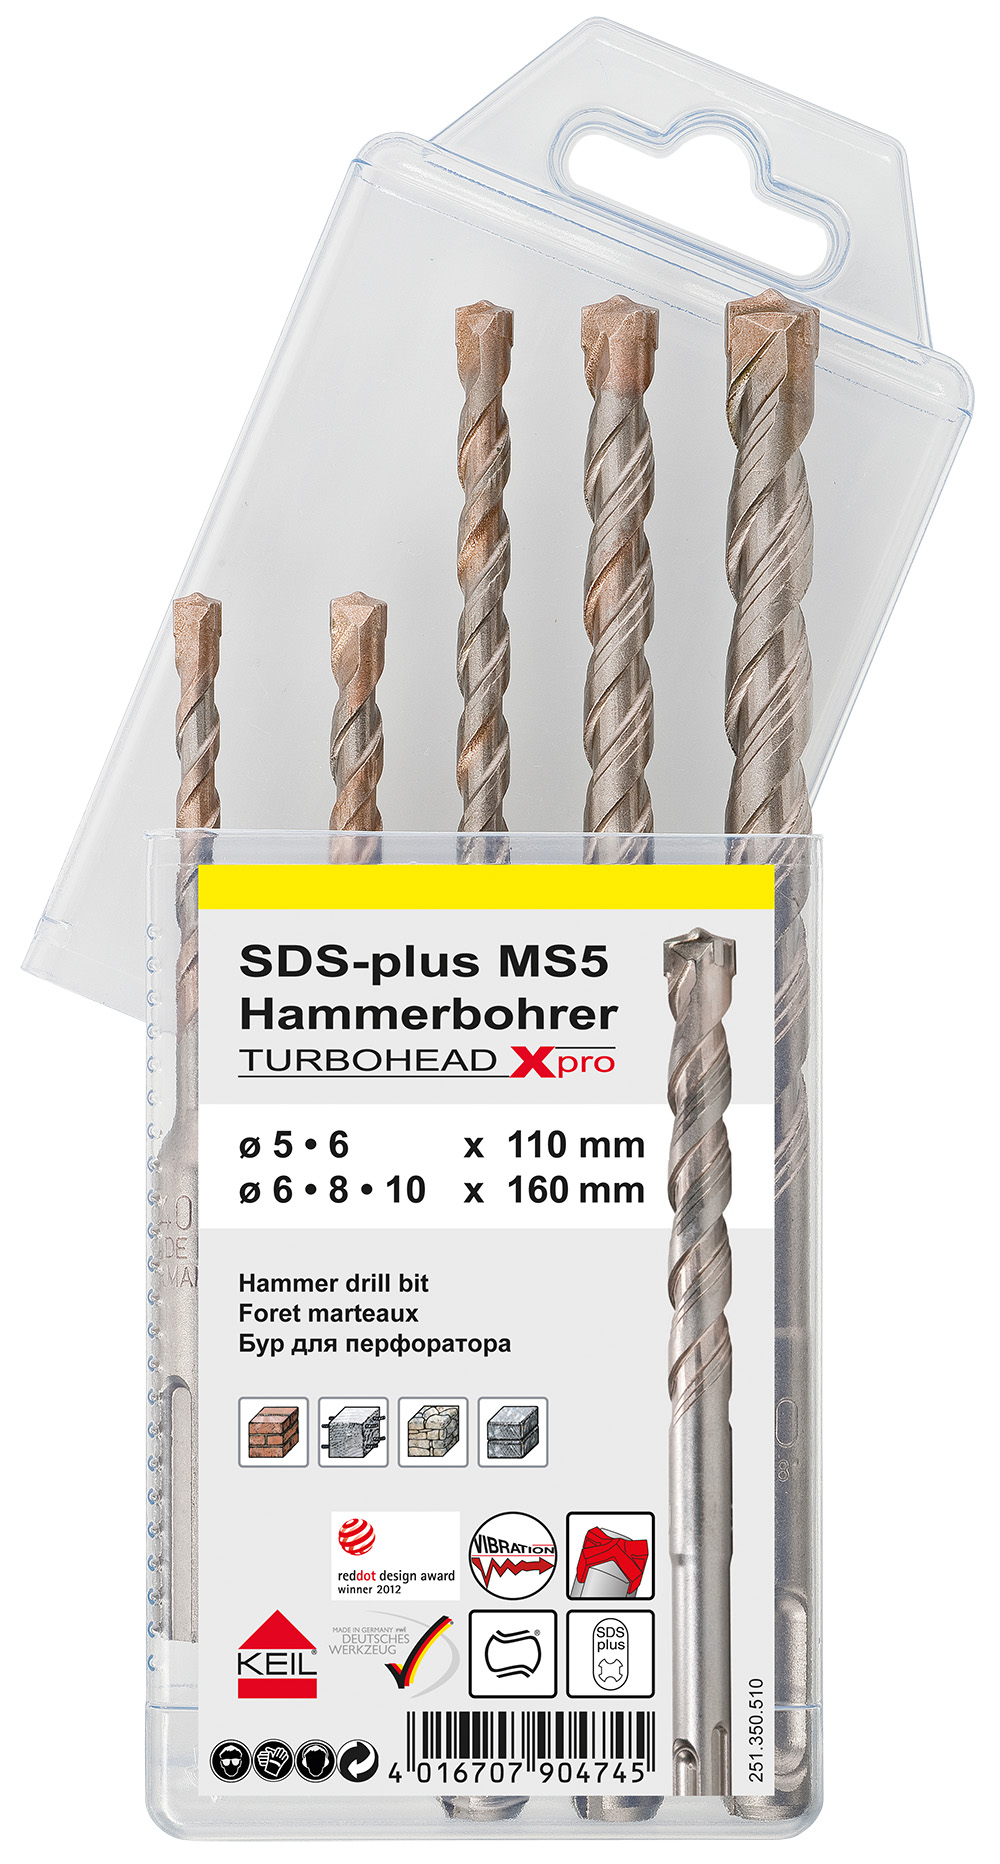 Keil Hammer Bohrer Turbohead Xpro MS5 SDS-plus MultiPack 5-teilig